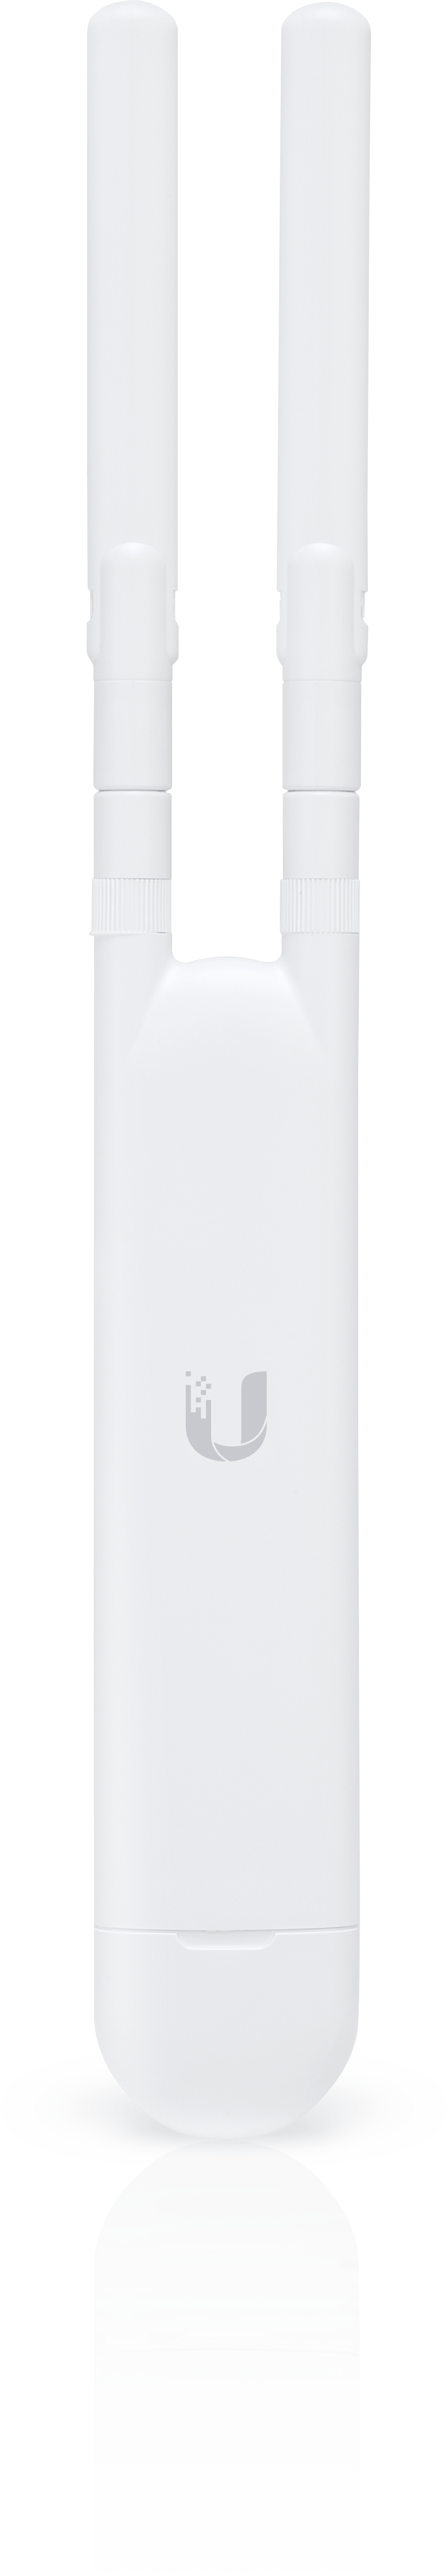 UBIQUITI® UAP-AC-M-US UB04UAPACMUS